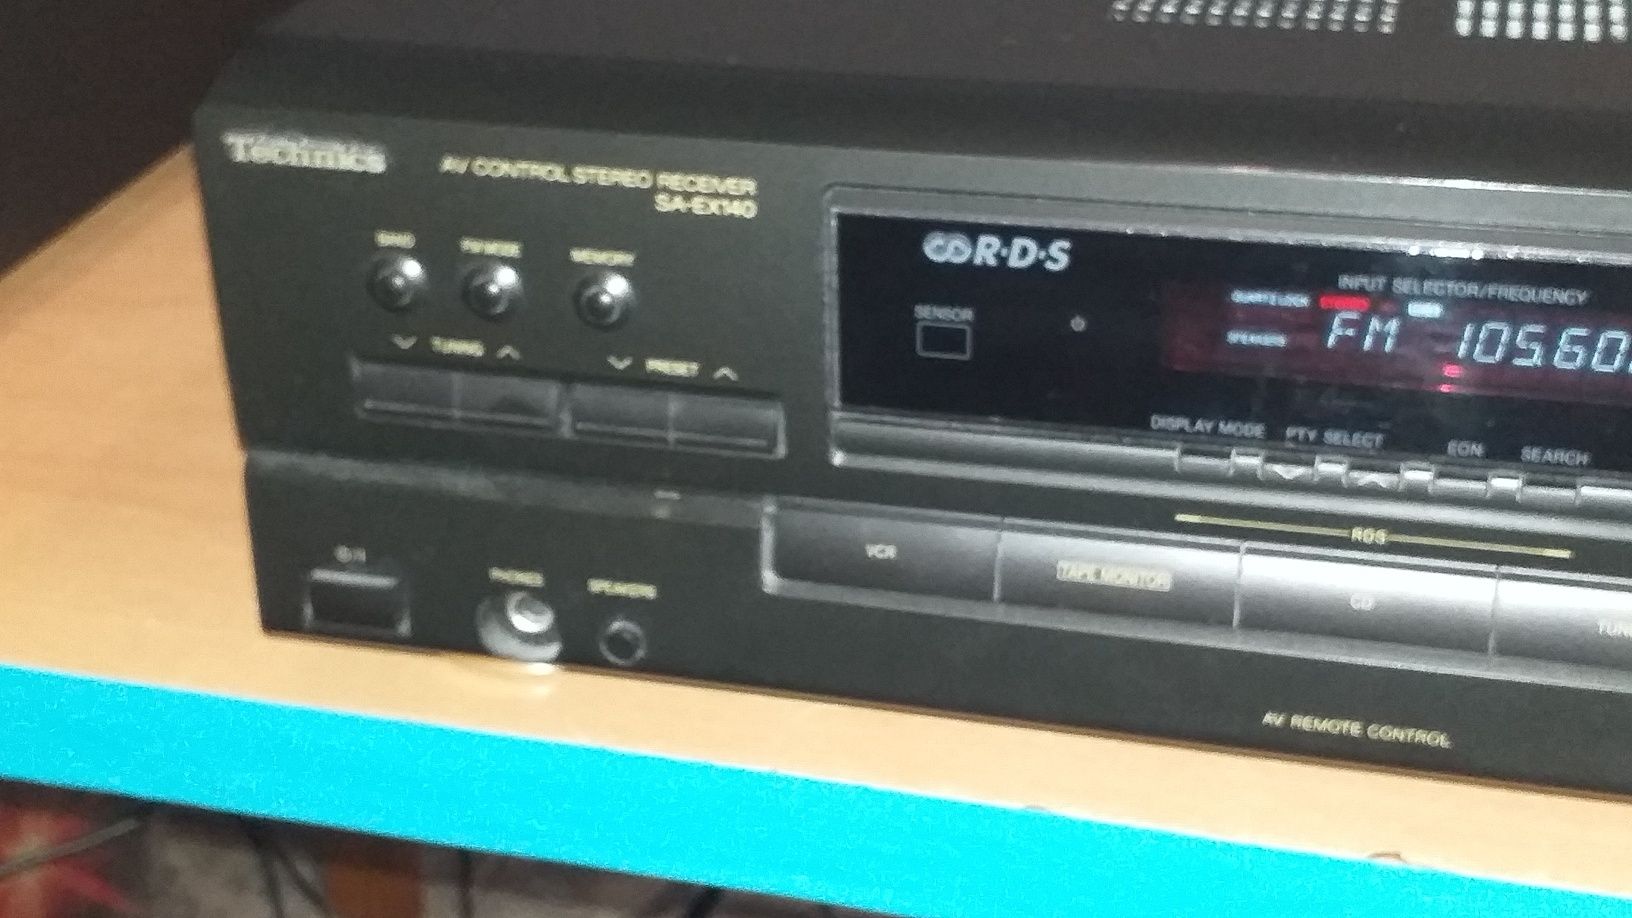 Amplituner stereo Technics SA-EX140